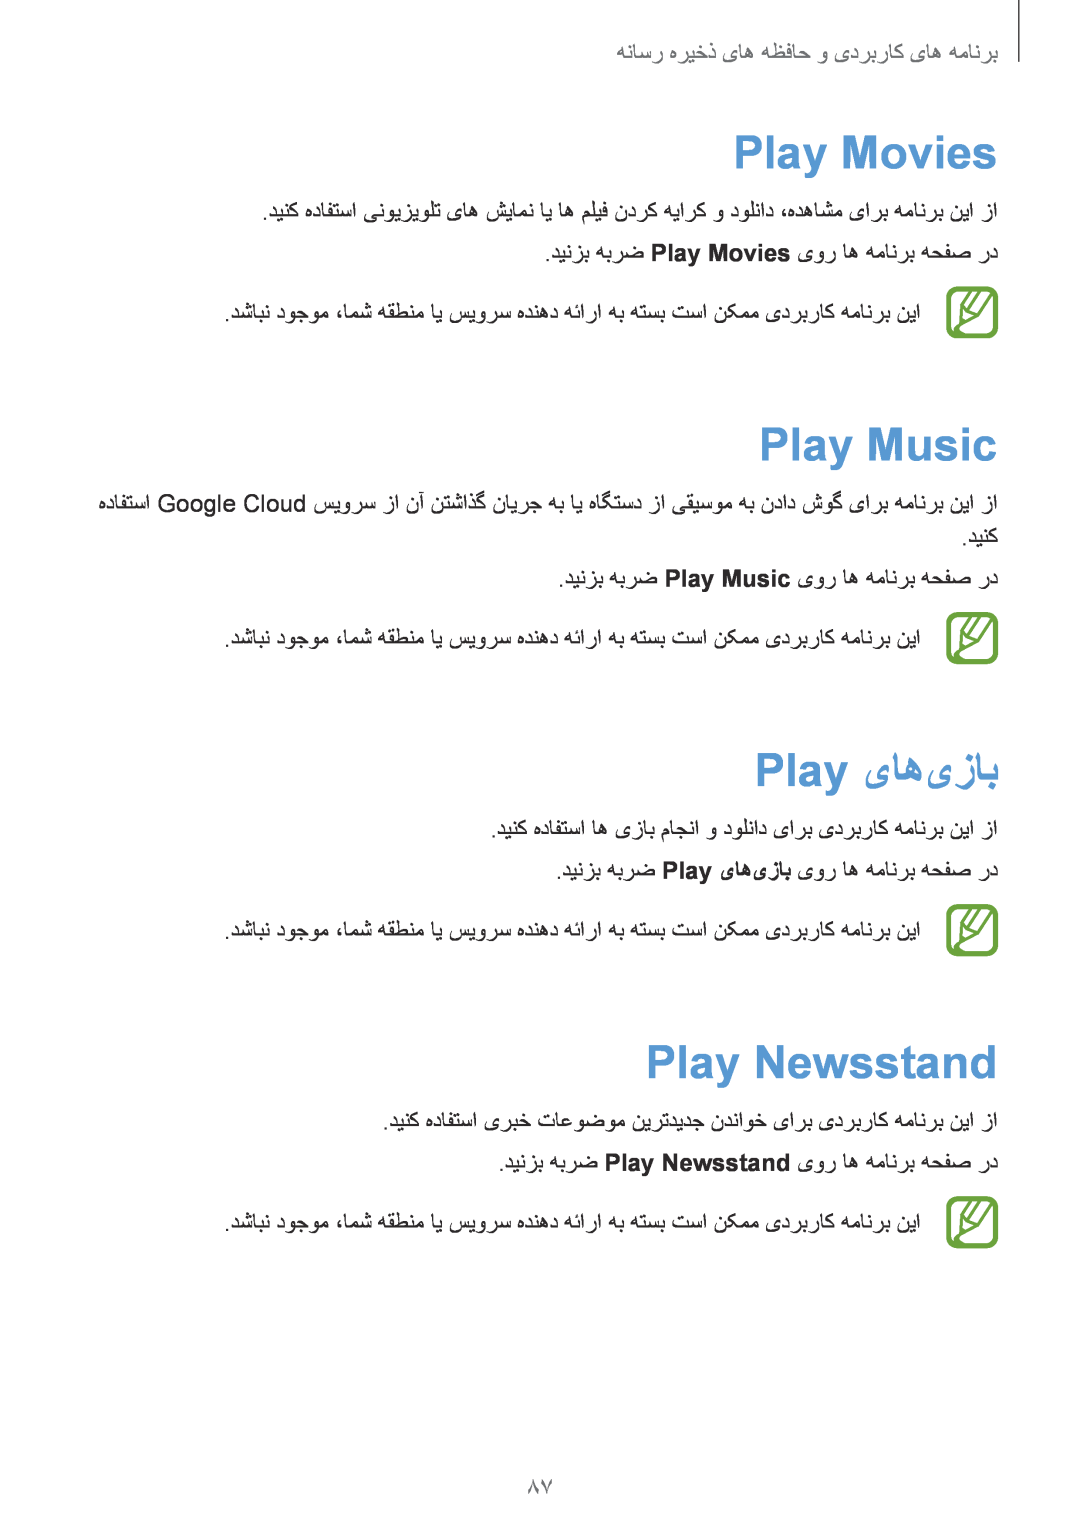 Samsung GT-I9300RWITUN Play Movies, Play Music, Play یاه‌ىزاب, Play Newsstand, ٜㄆ䘆䔆䜀 䜆찀 ꤆ㄆ尨ردی و حافظه های ذخی對ره رسا 